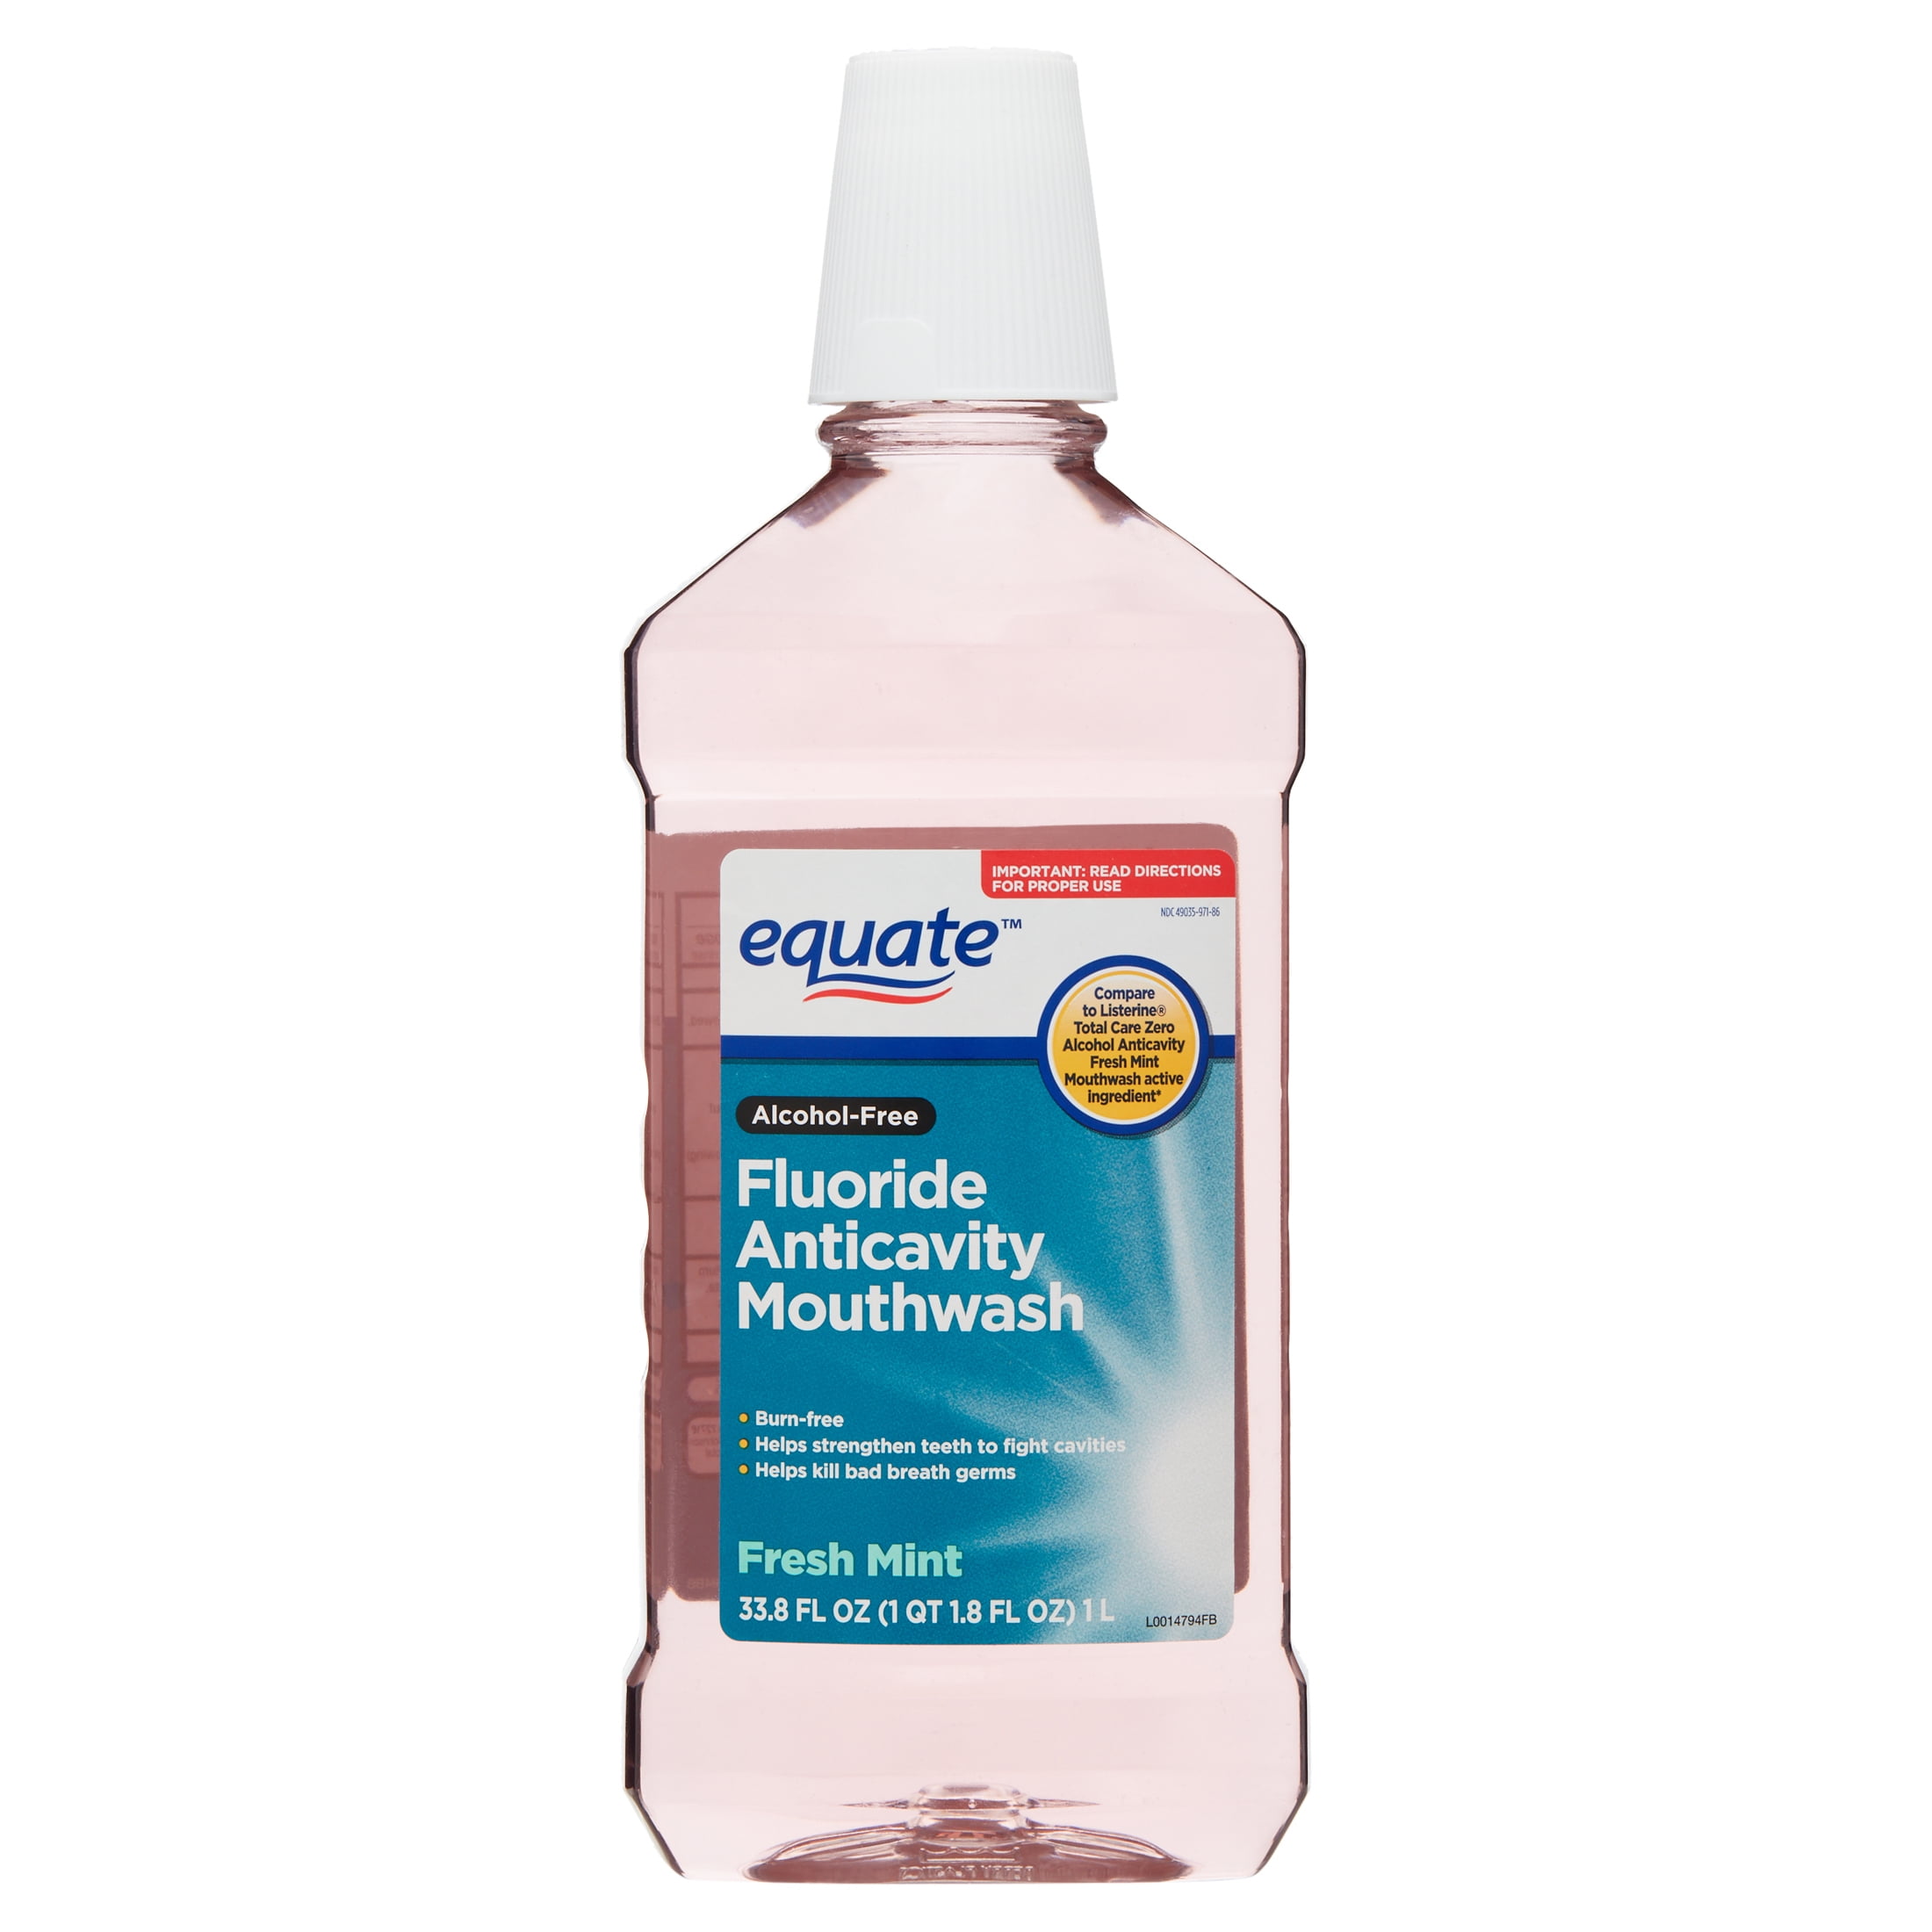 Equate Alcohol-Free Fluoride Anticavity Mouthwash, Fresh Mint, 33.8 fl oz